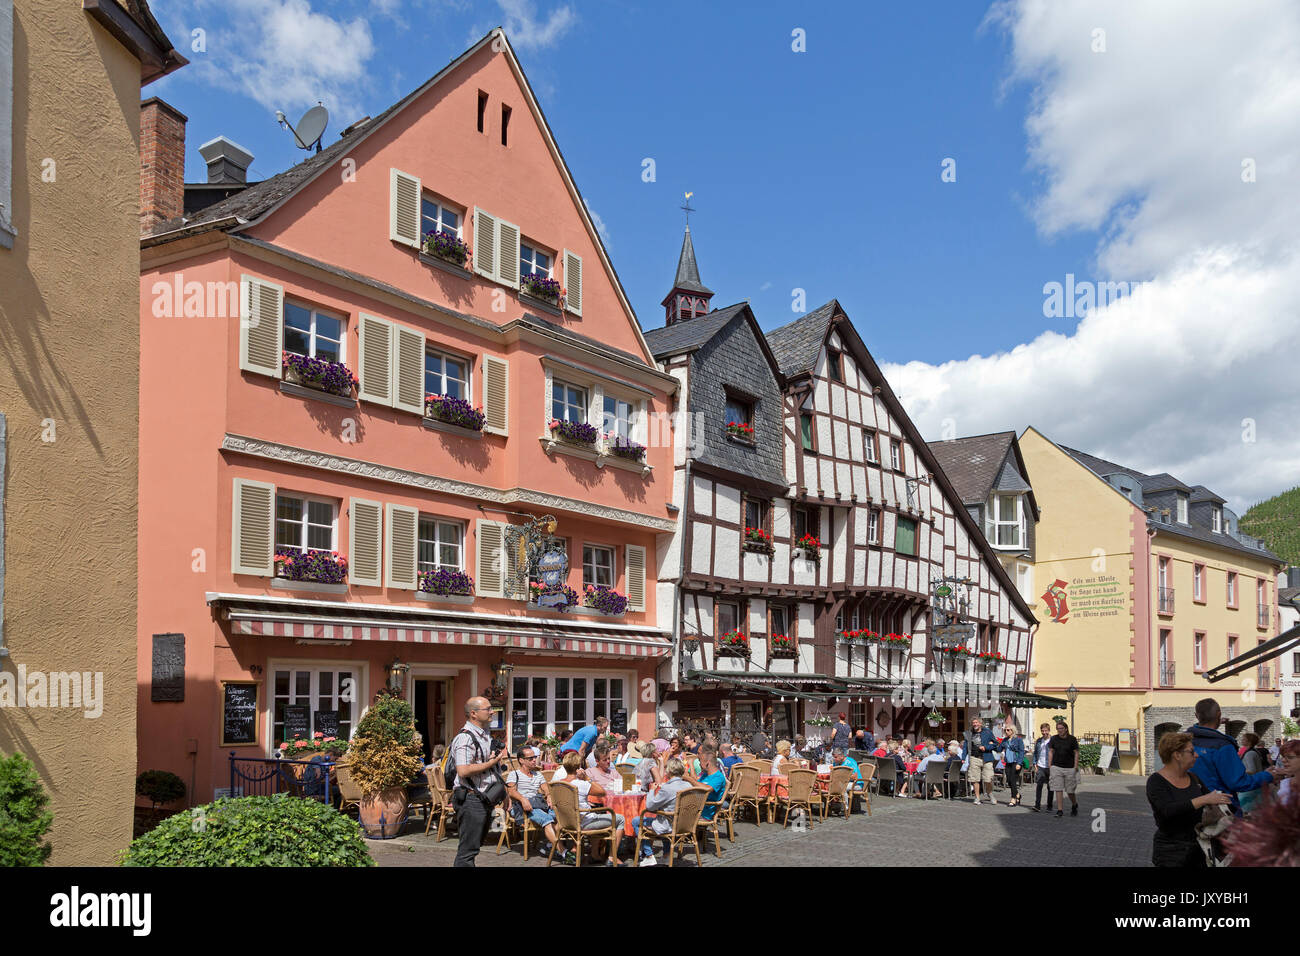 Alter Hotel Klosterhof, vieille ville, Bernkastel-Kues, vallée de la Moselle, Allemagne Banque D'Images